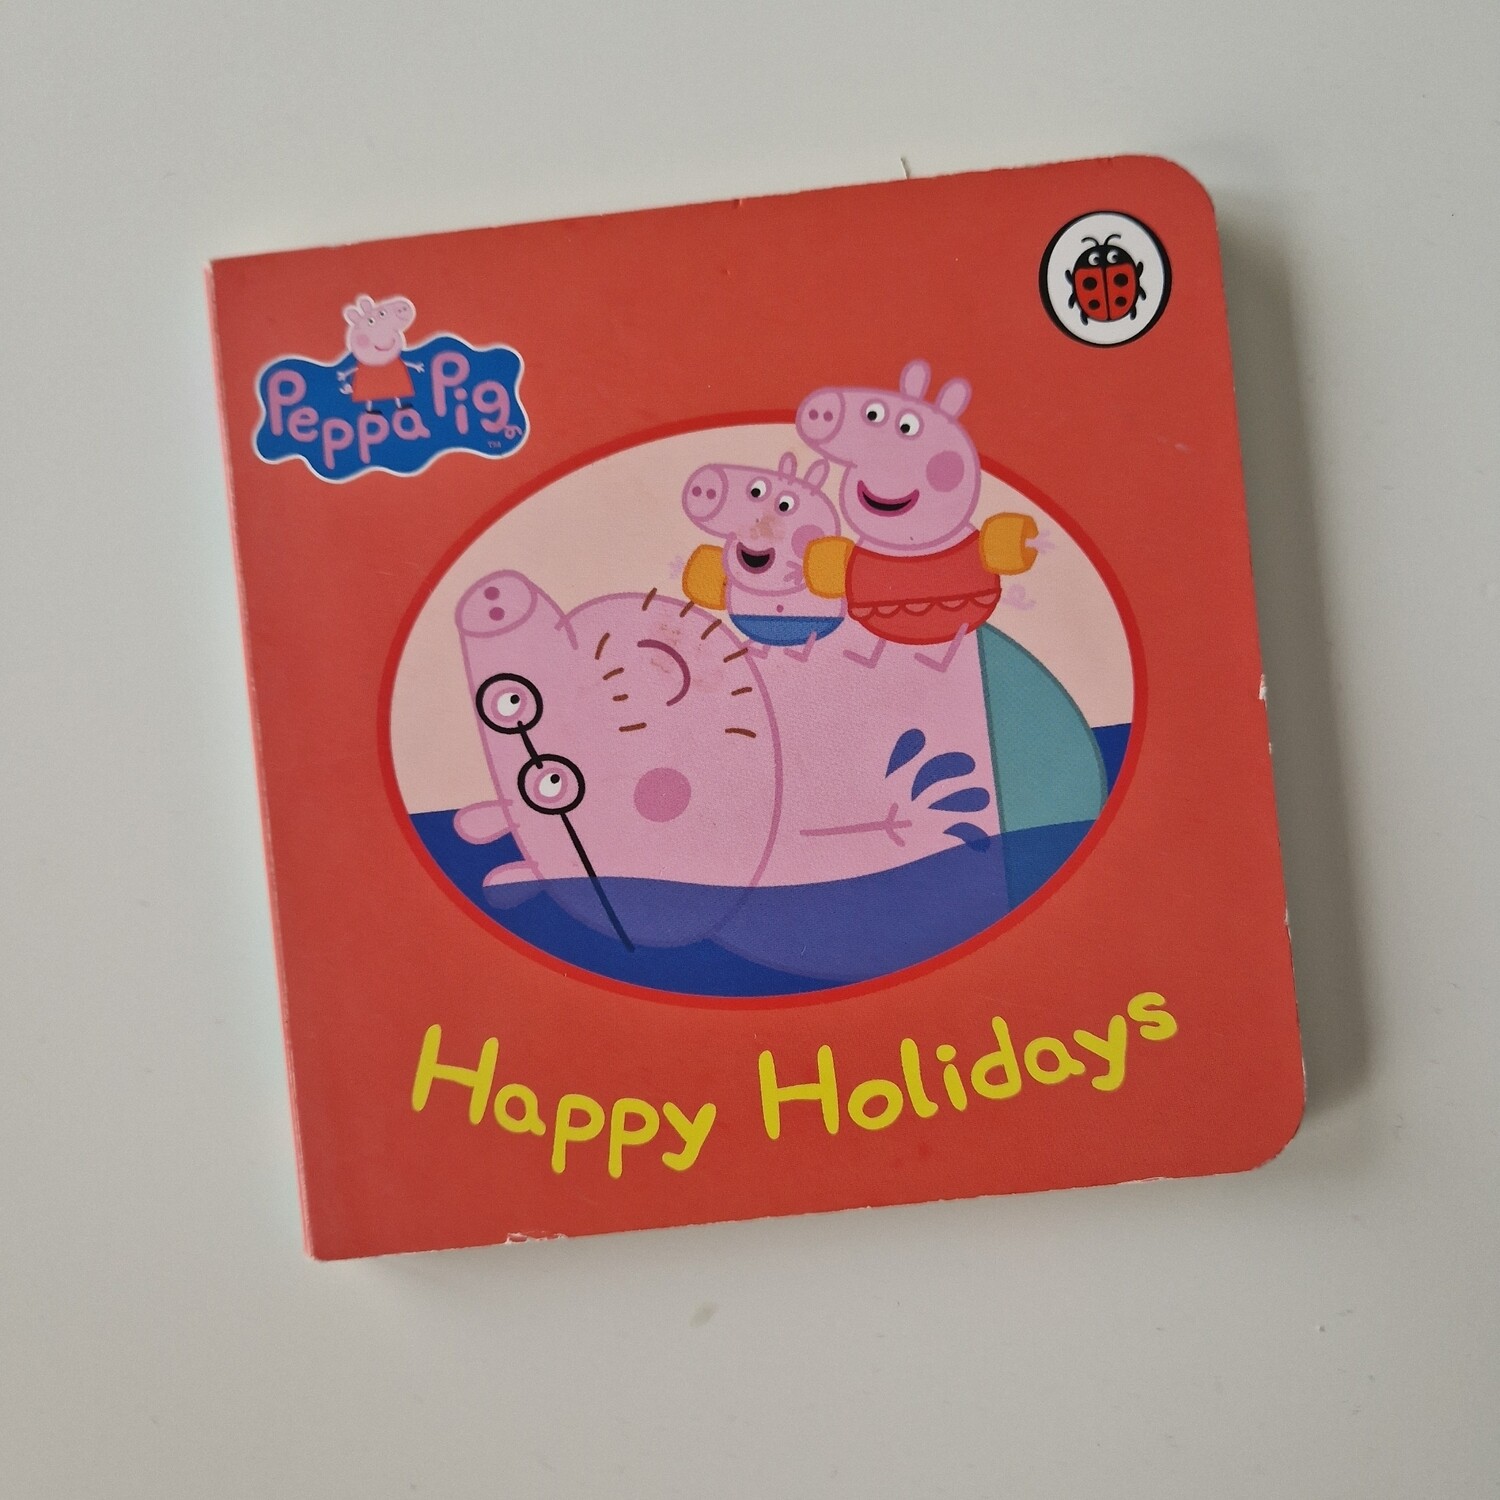 Peppa Pig - Happy Holidays